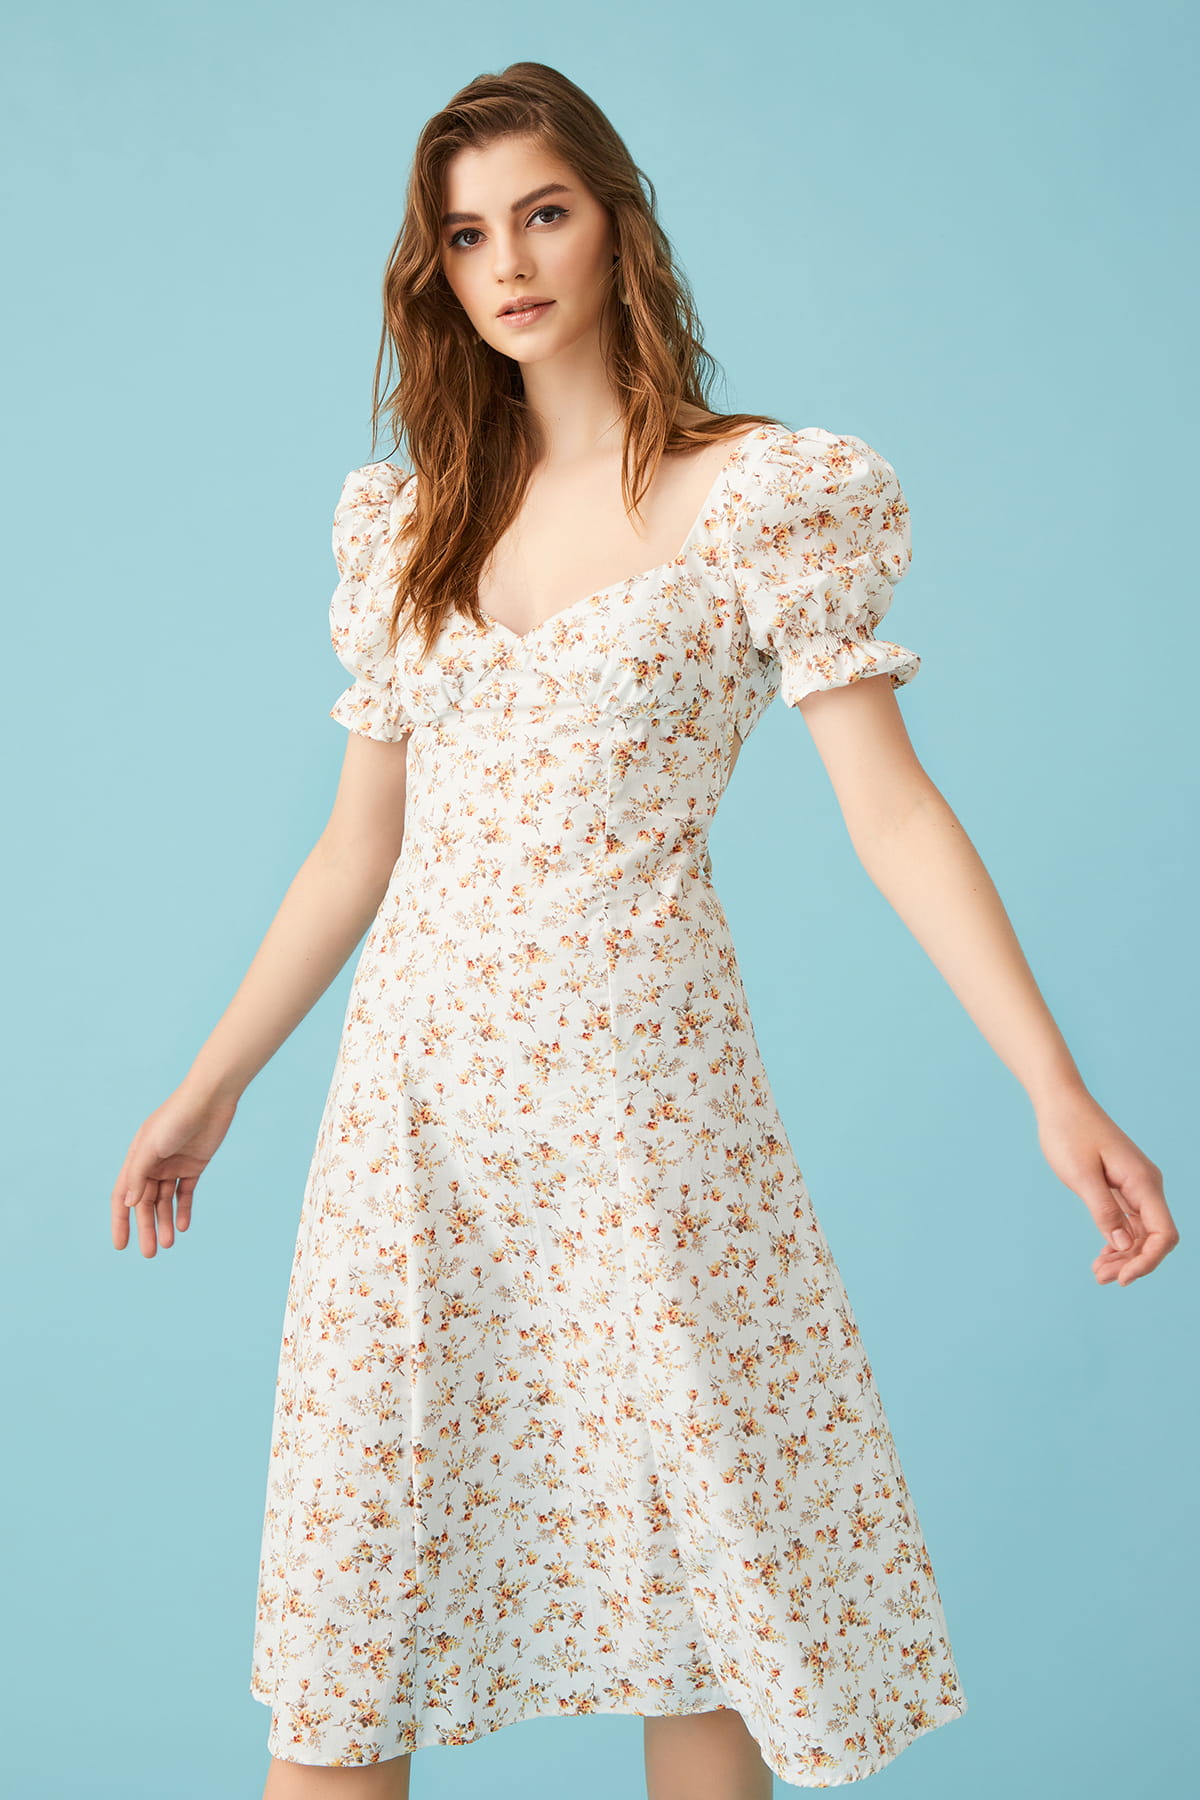 LANIA Floral Patterned White Midi Dress